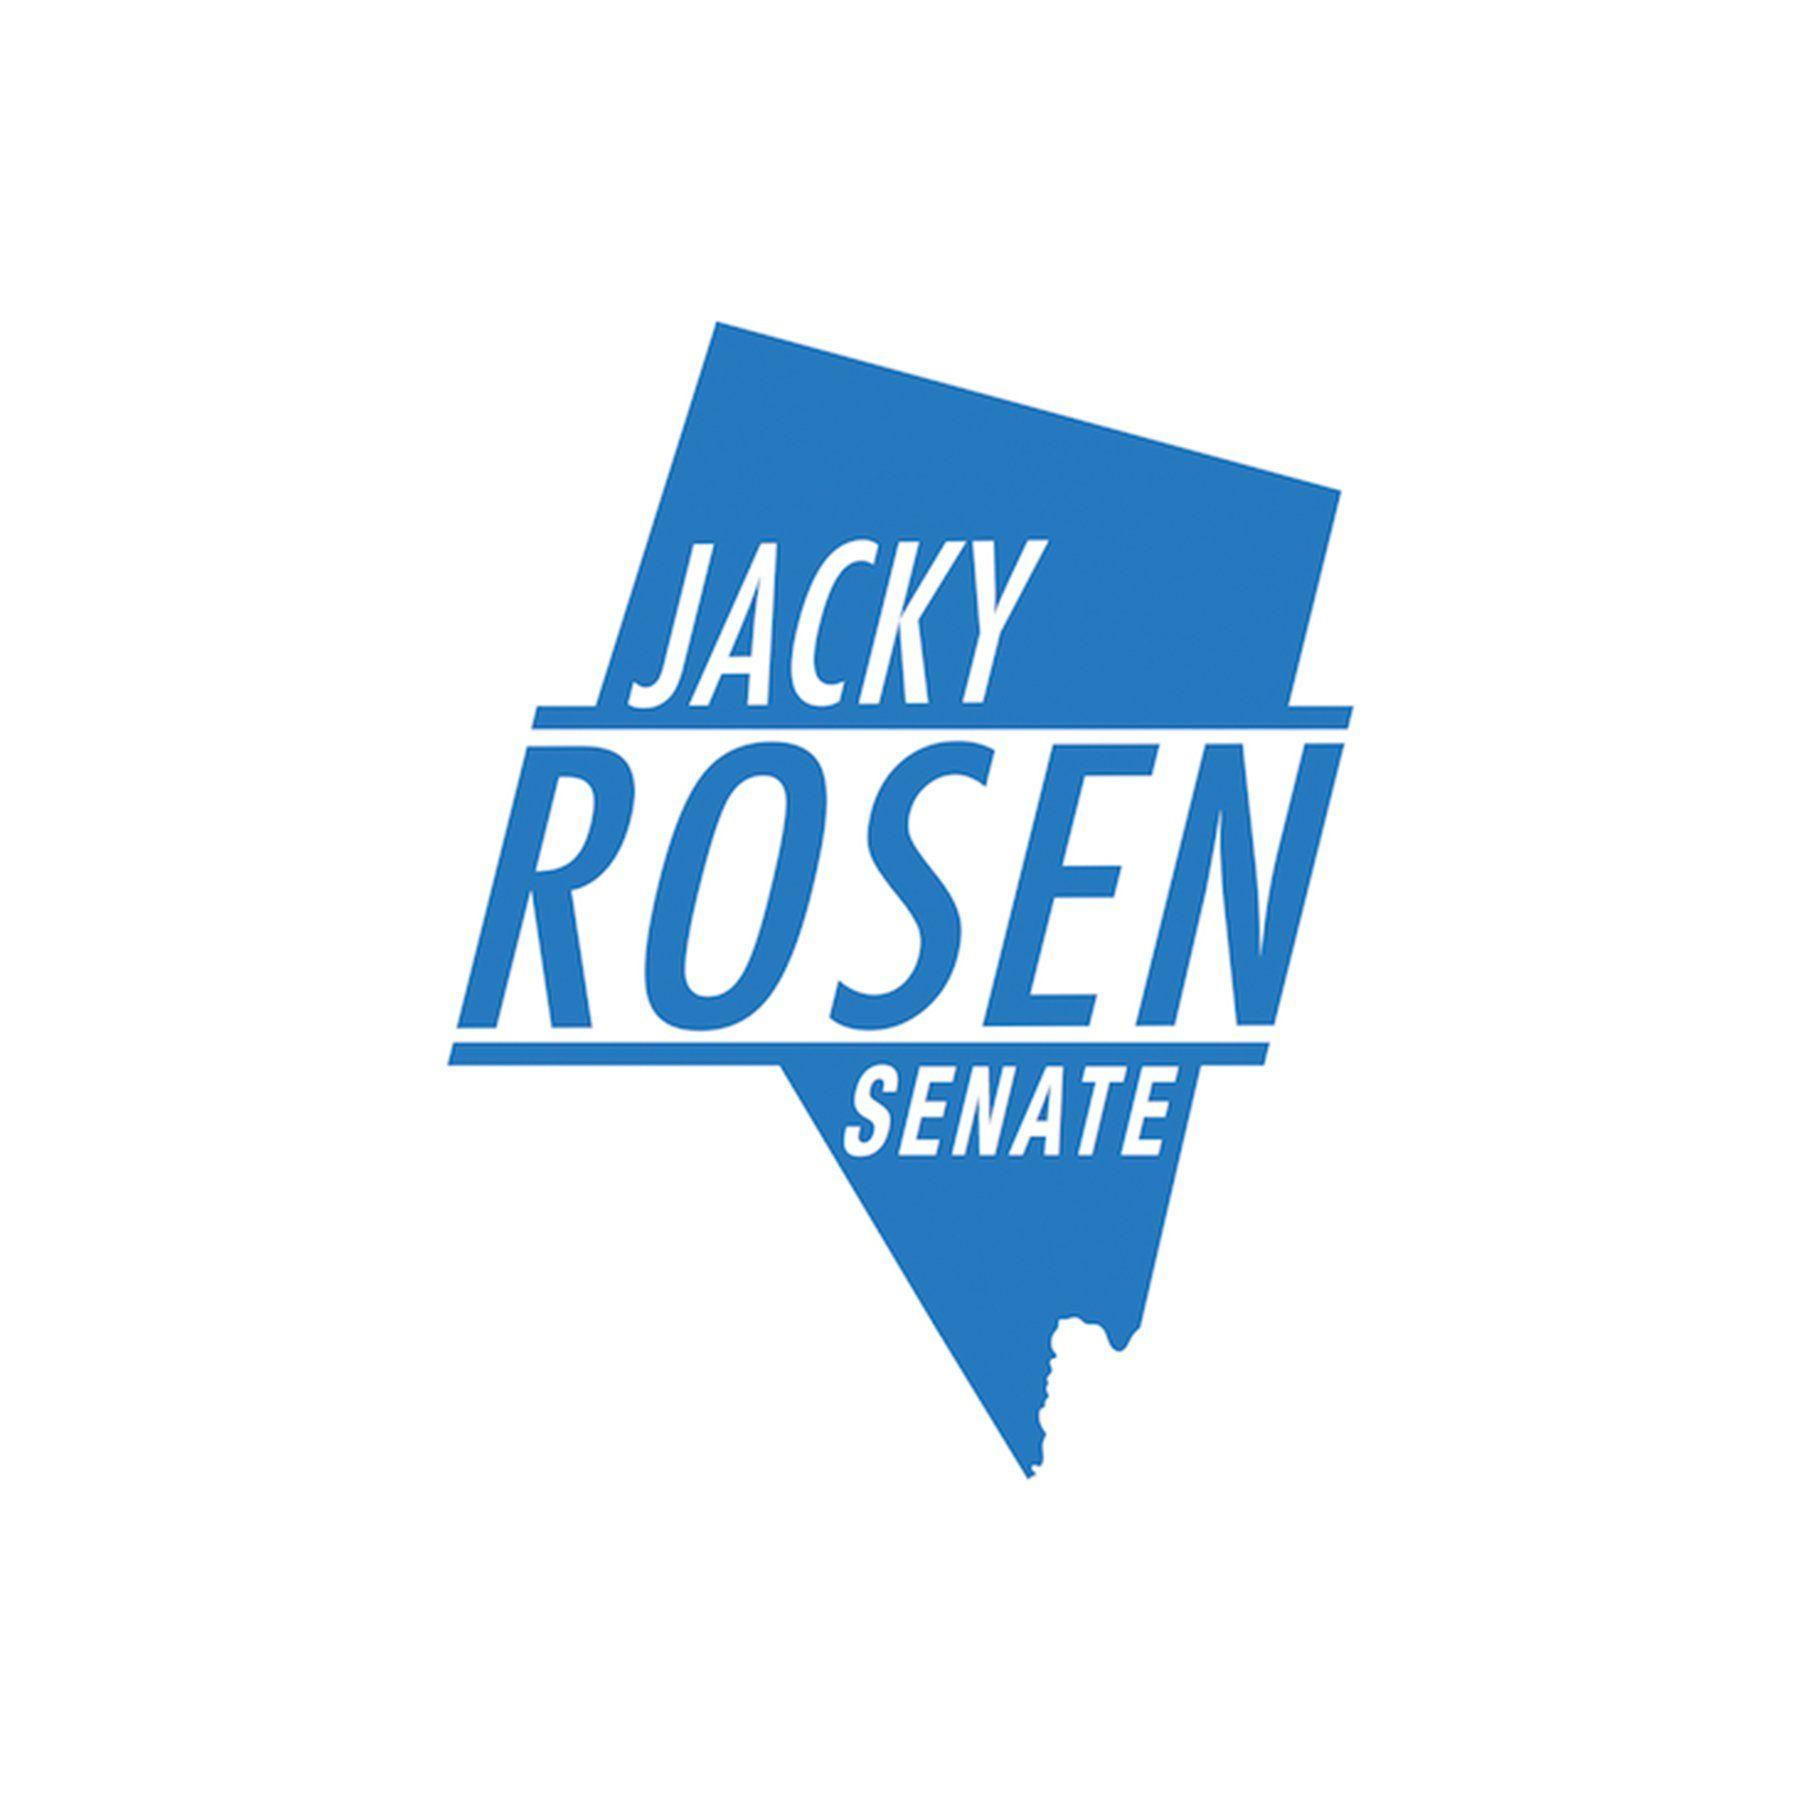 Rosen Logo - Campaign logo for Jacky Rosen | Campaign Communications | Pinterest ...